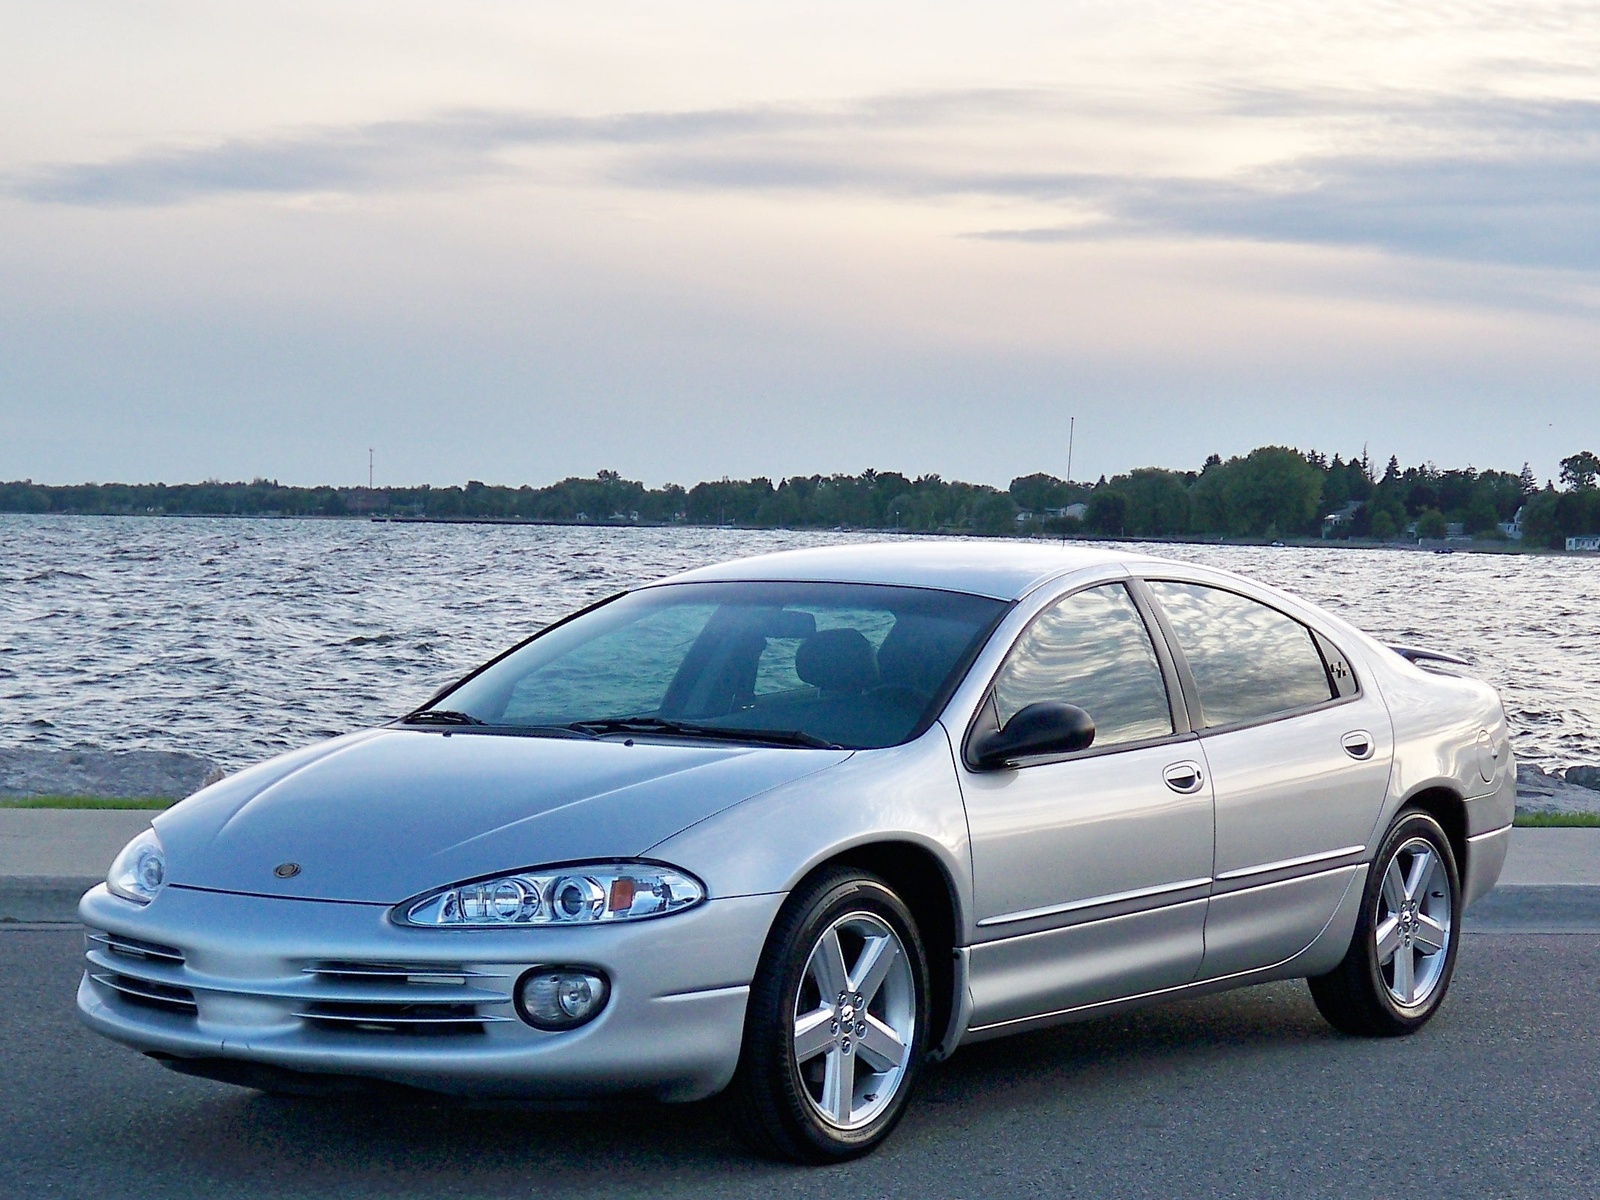 2000 Chrysler intrepid consumer reviews #5